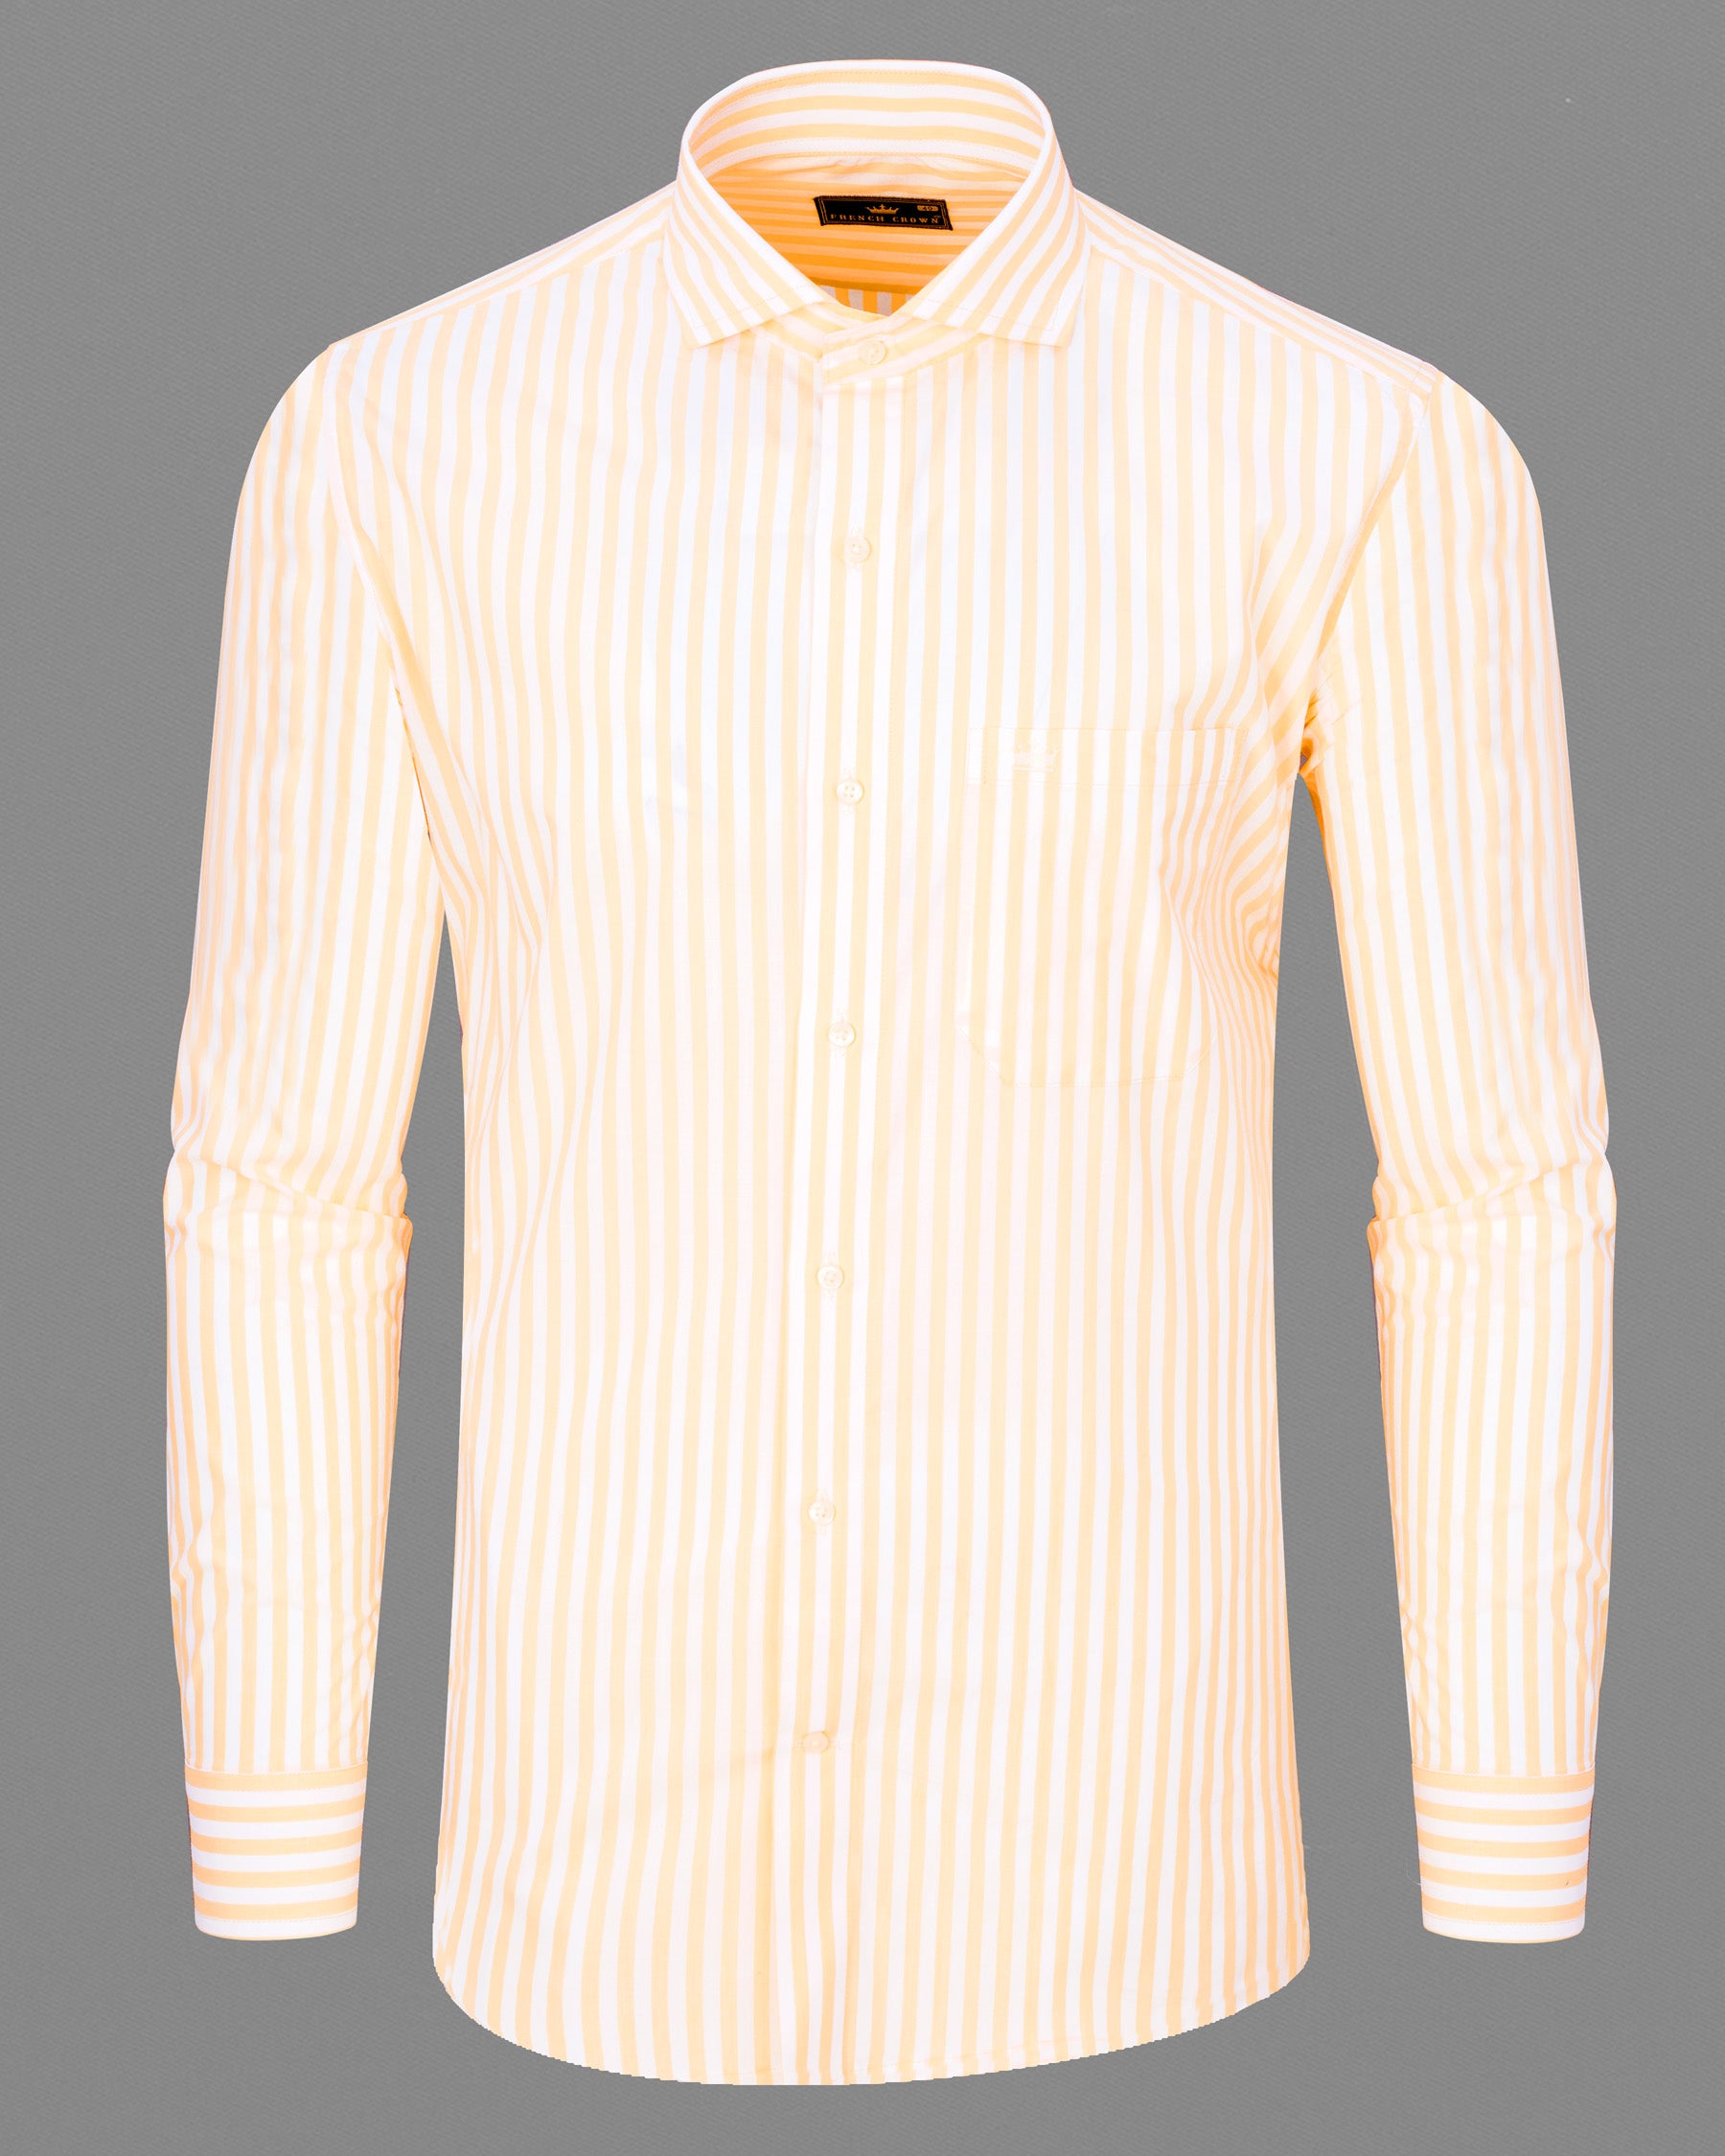 Astra with White Striped Premium Cotton Shirt